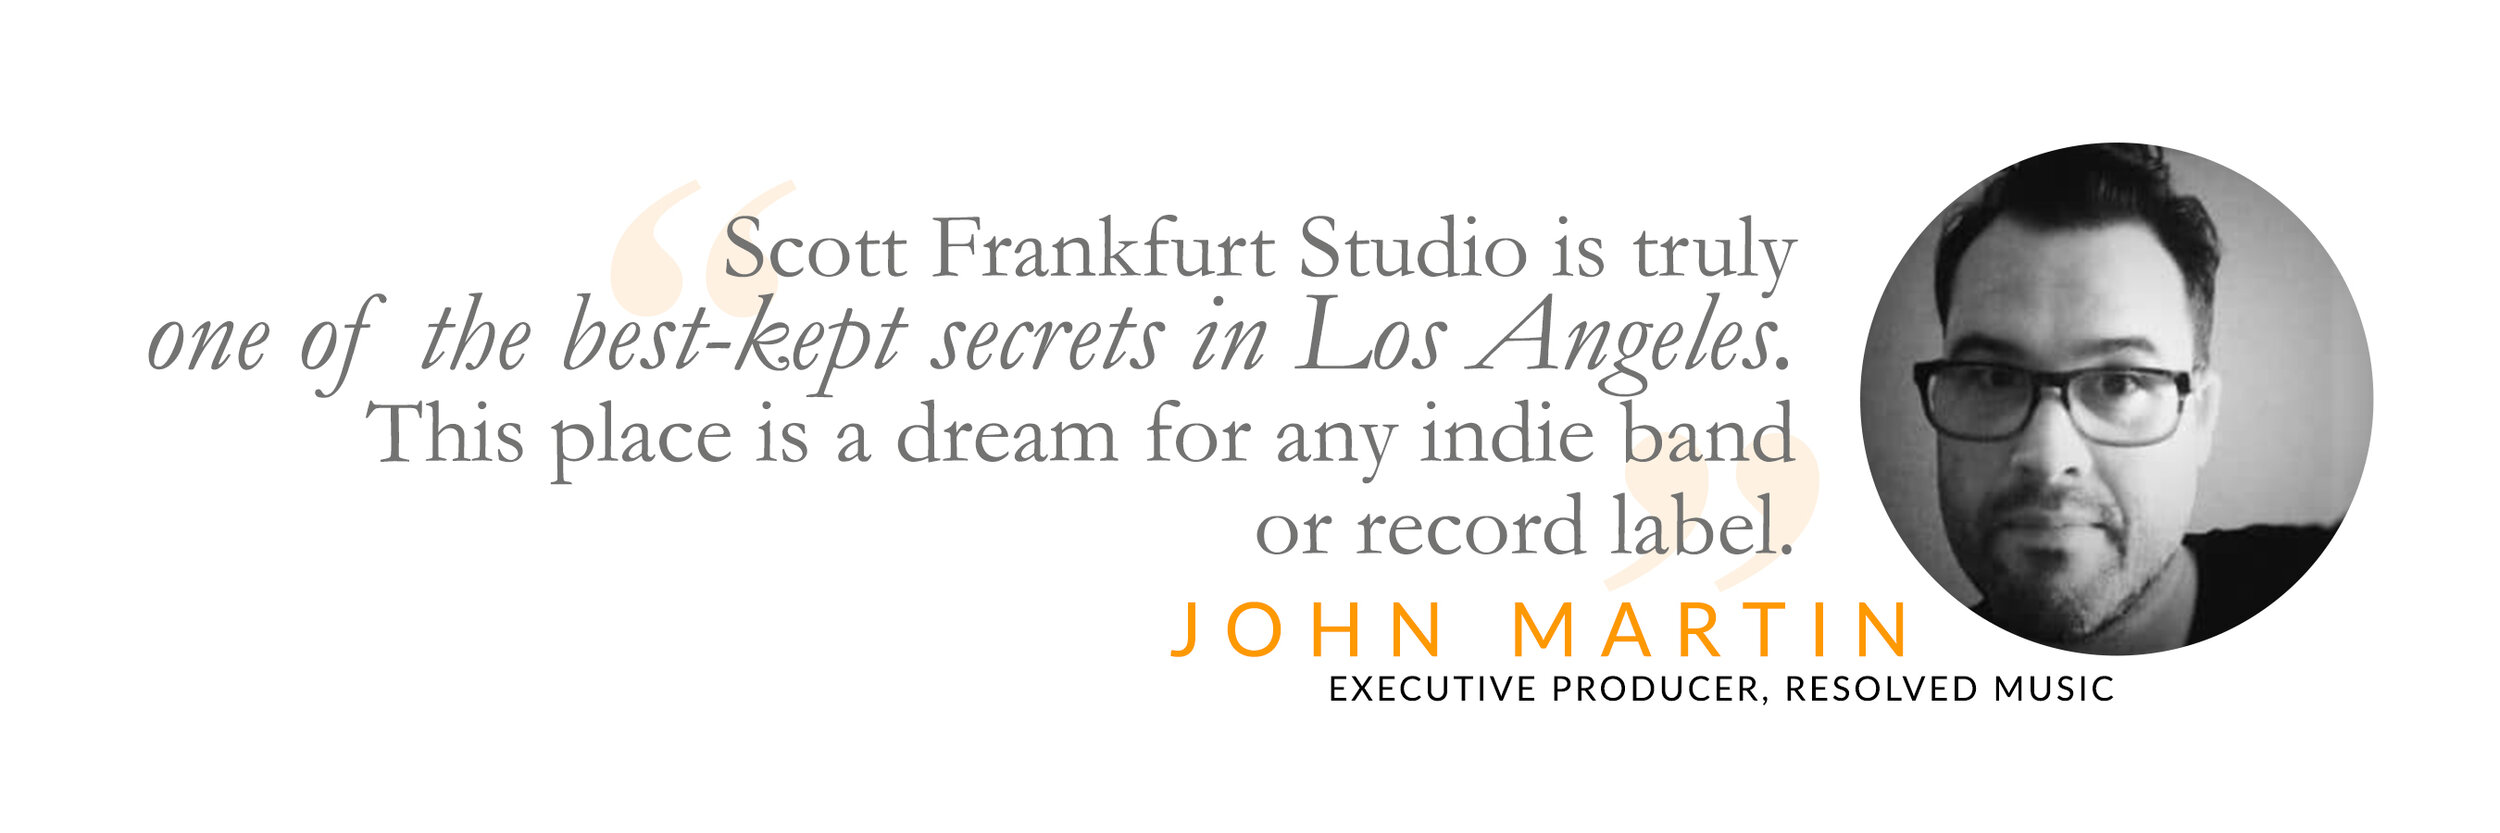 John Martin | Executive Producer, Resolved Music